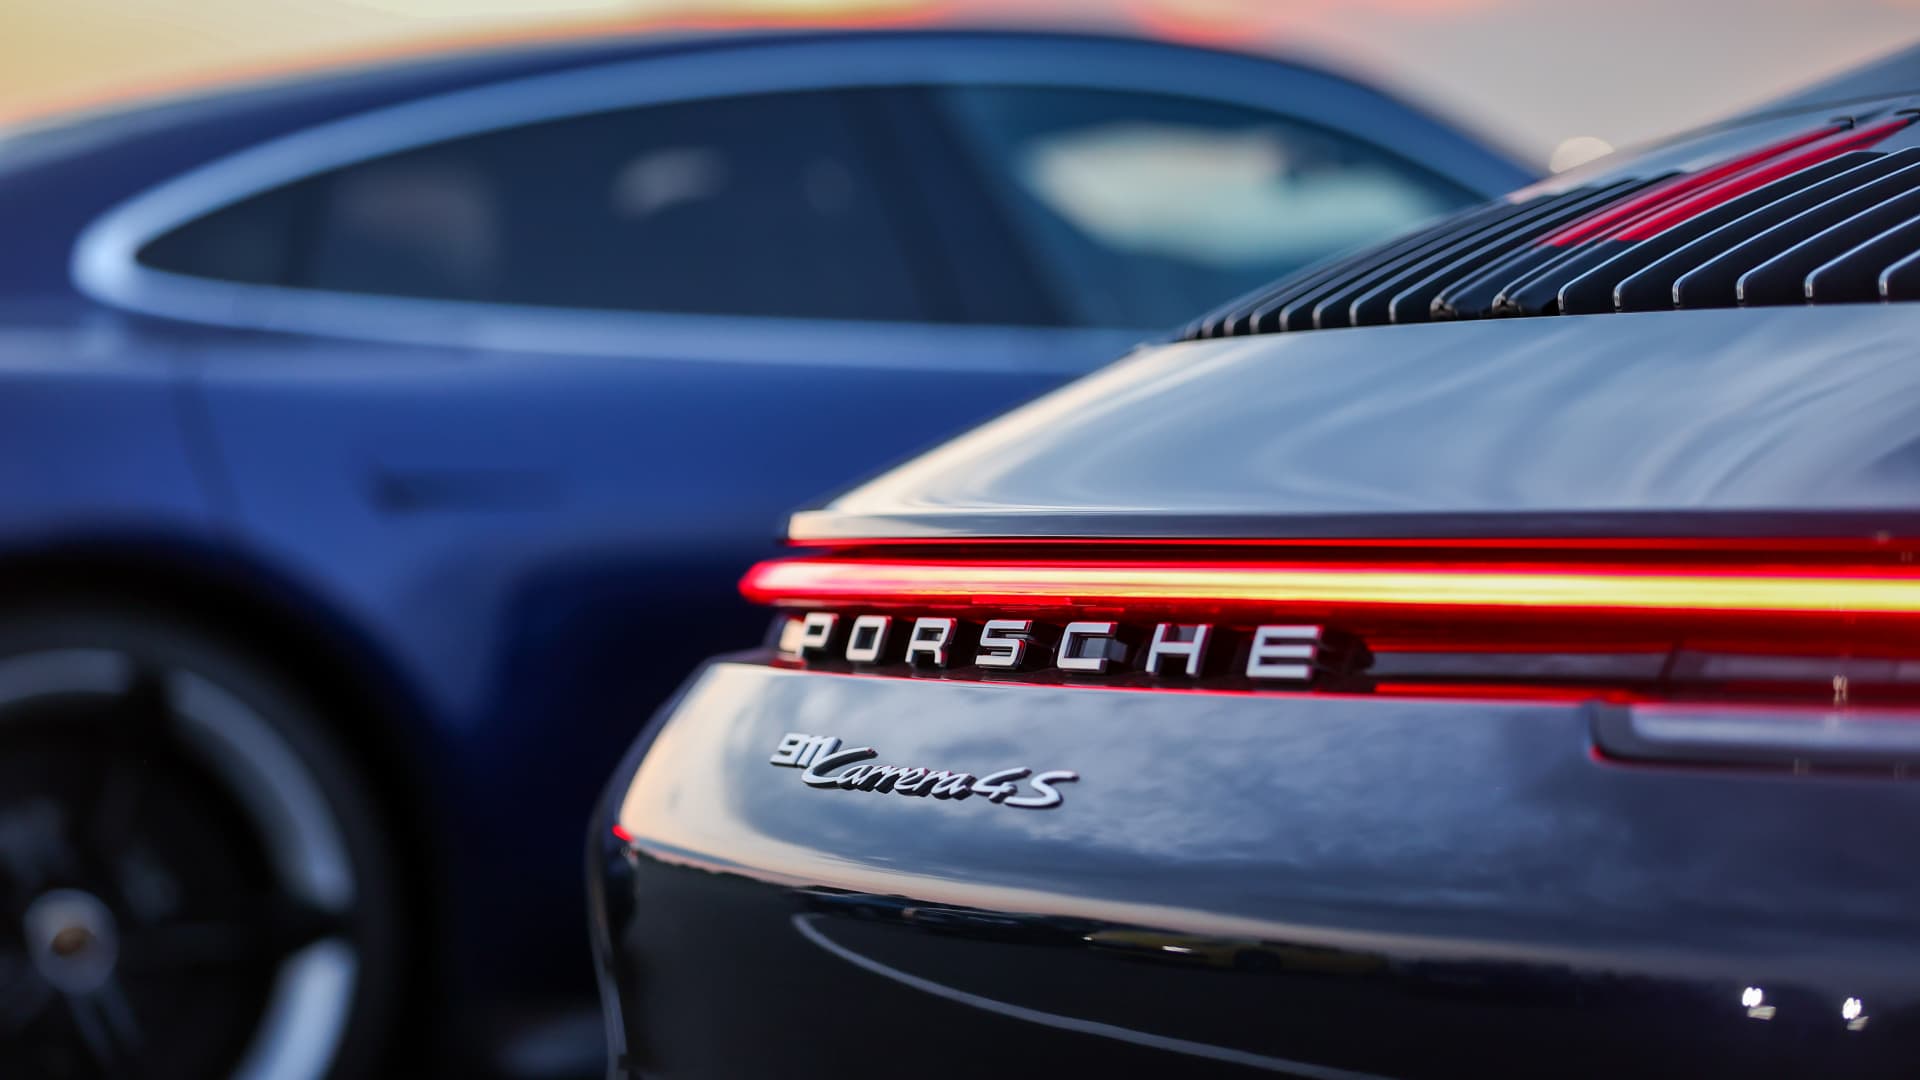 Volkswagen to decide on landmark Porsche listing later on Monday